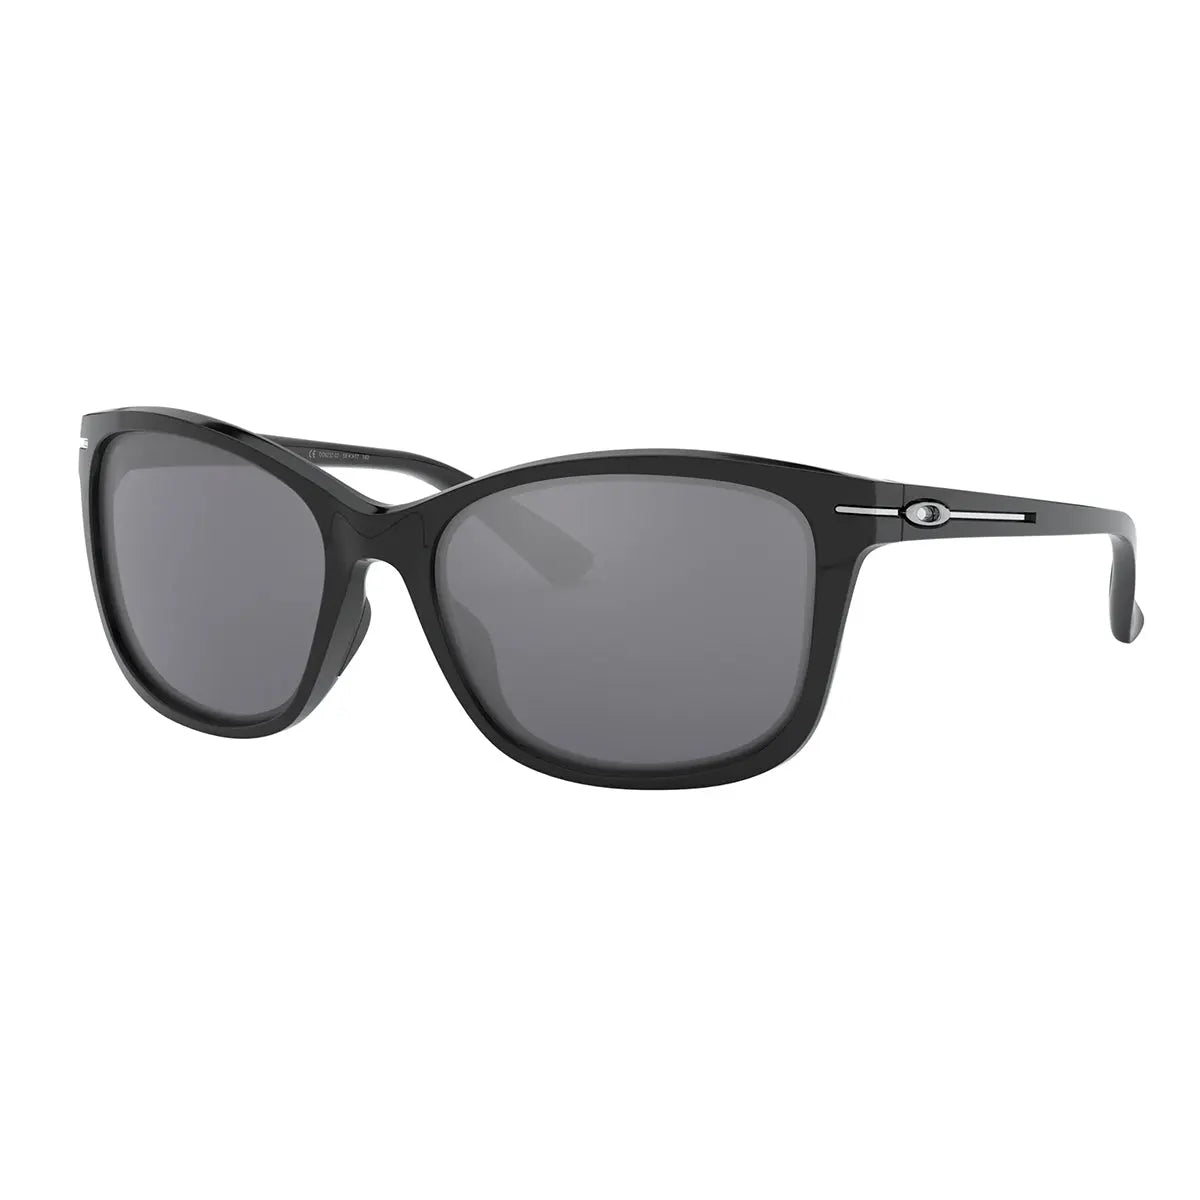 Oakley Women's Polarized Sunglasses Only $52.99 Shipped (Regularly $99)